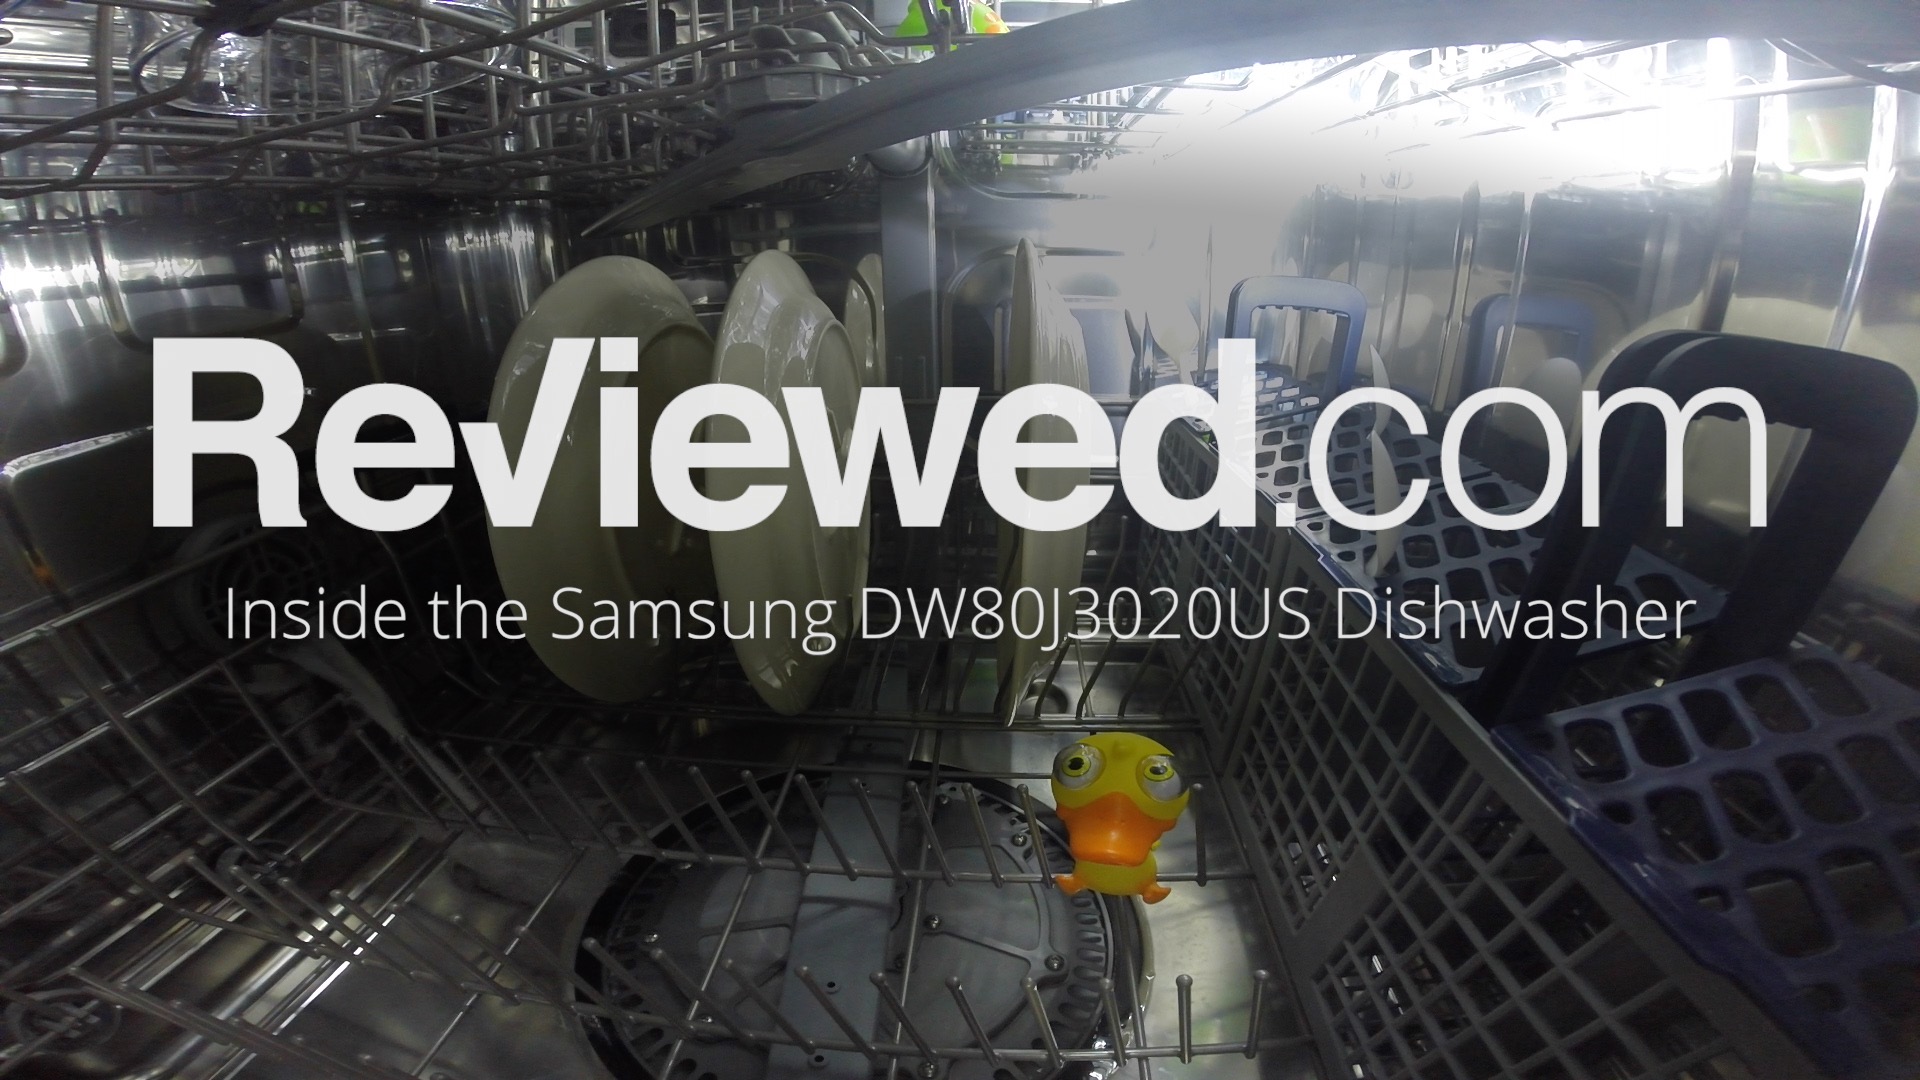 Take a ride INSIDE a Samsung dishwasher